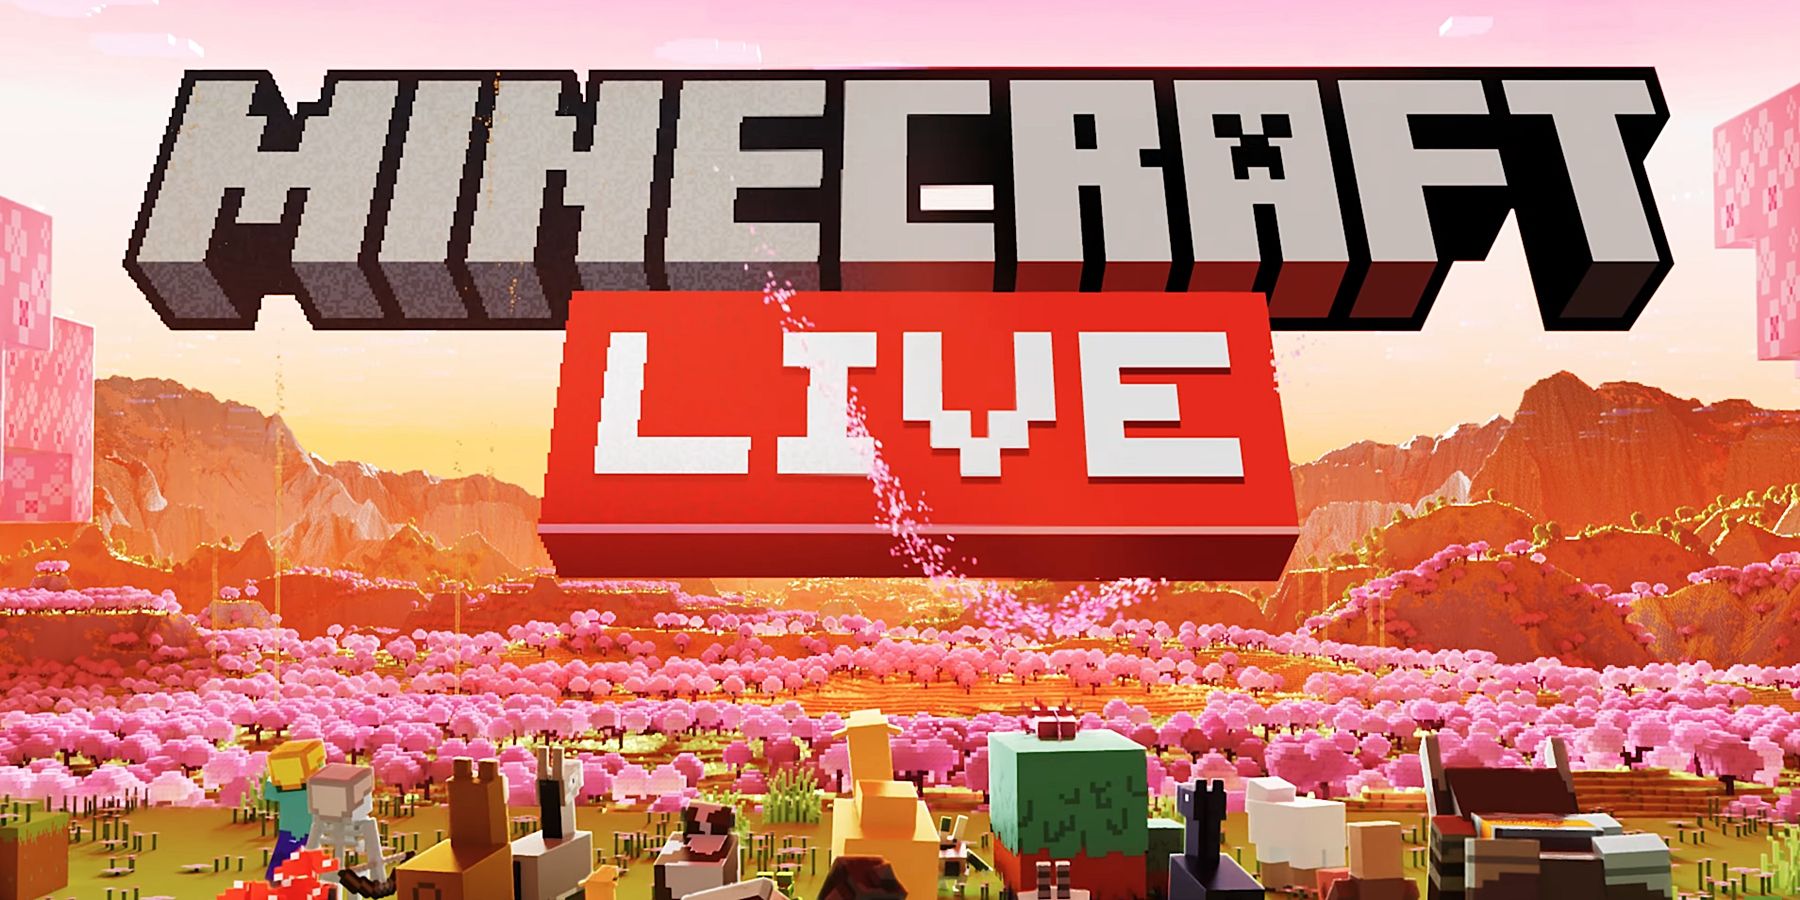 Minecraft Live 2022 